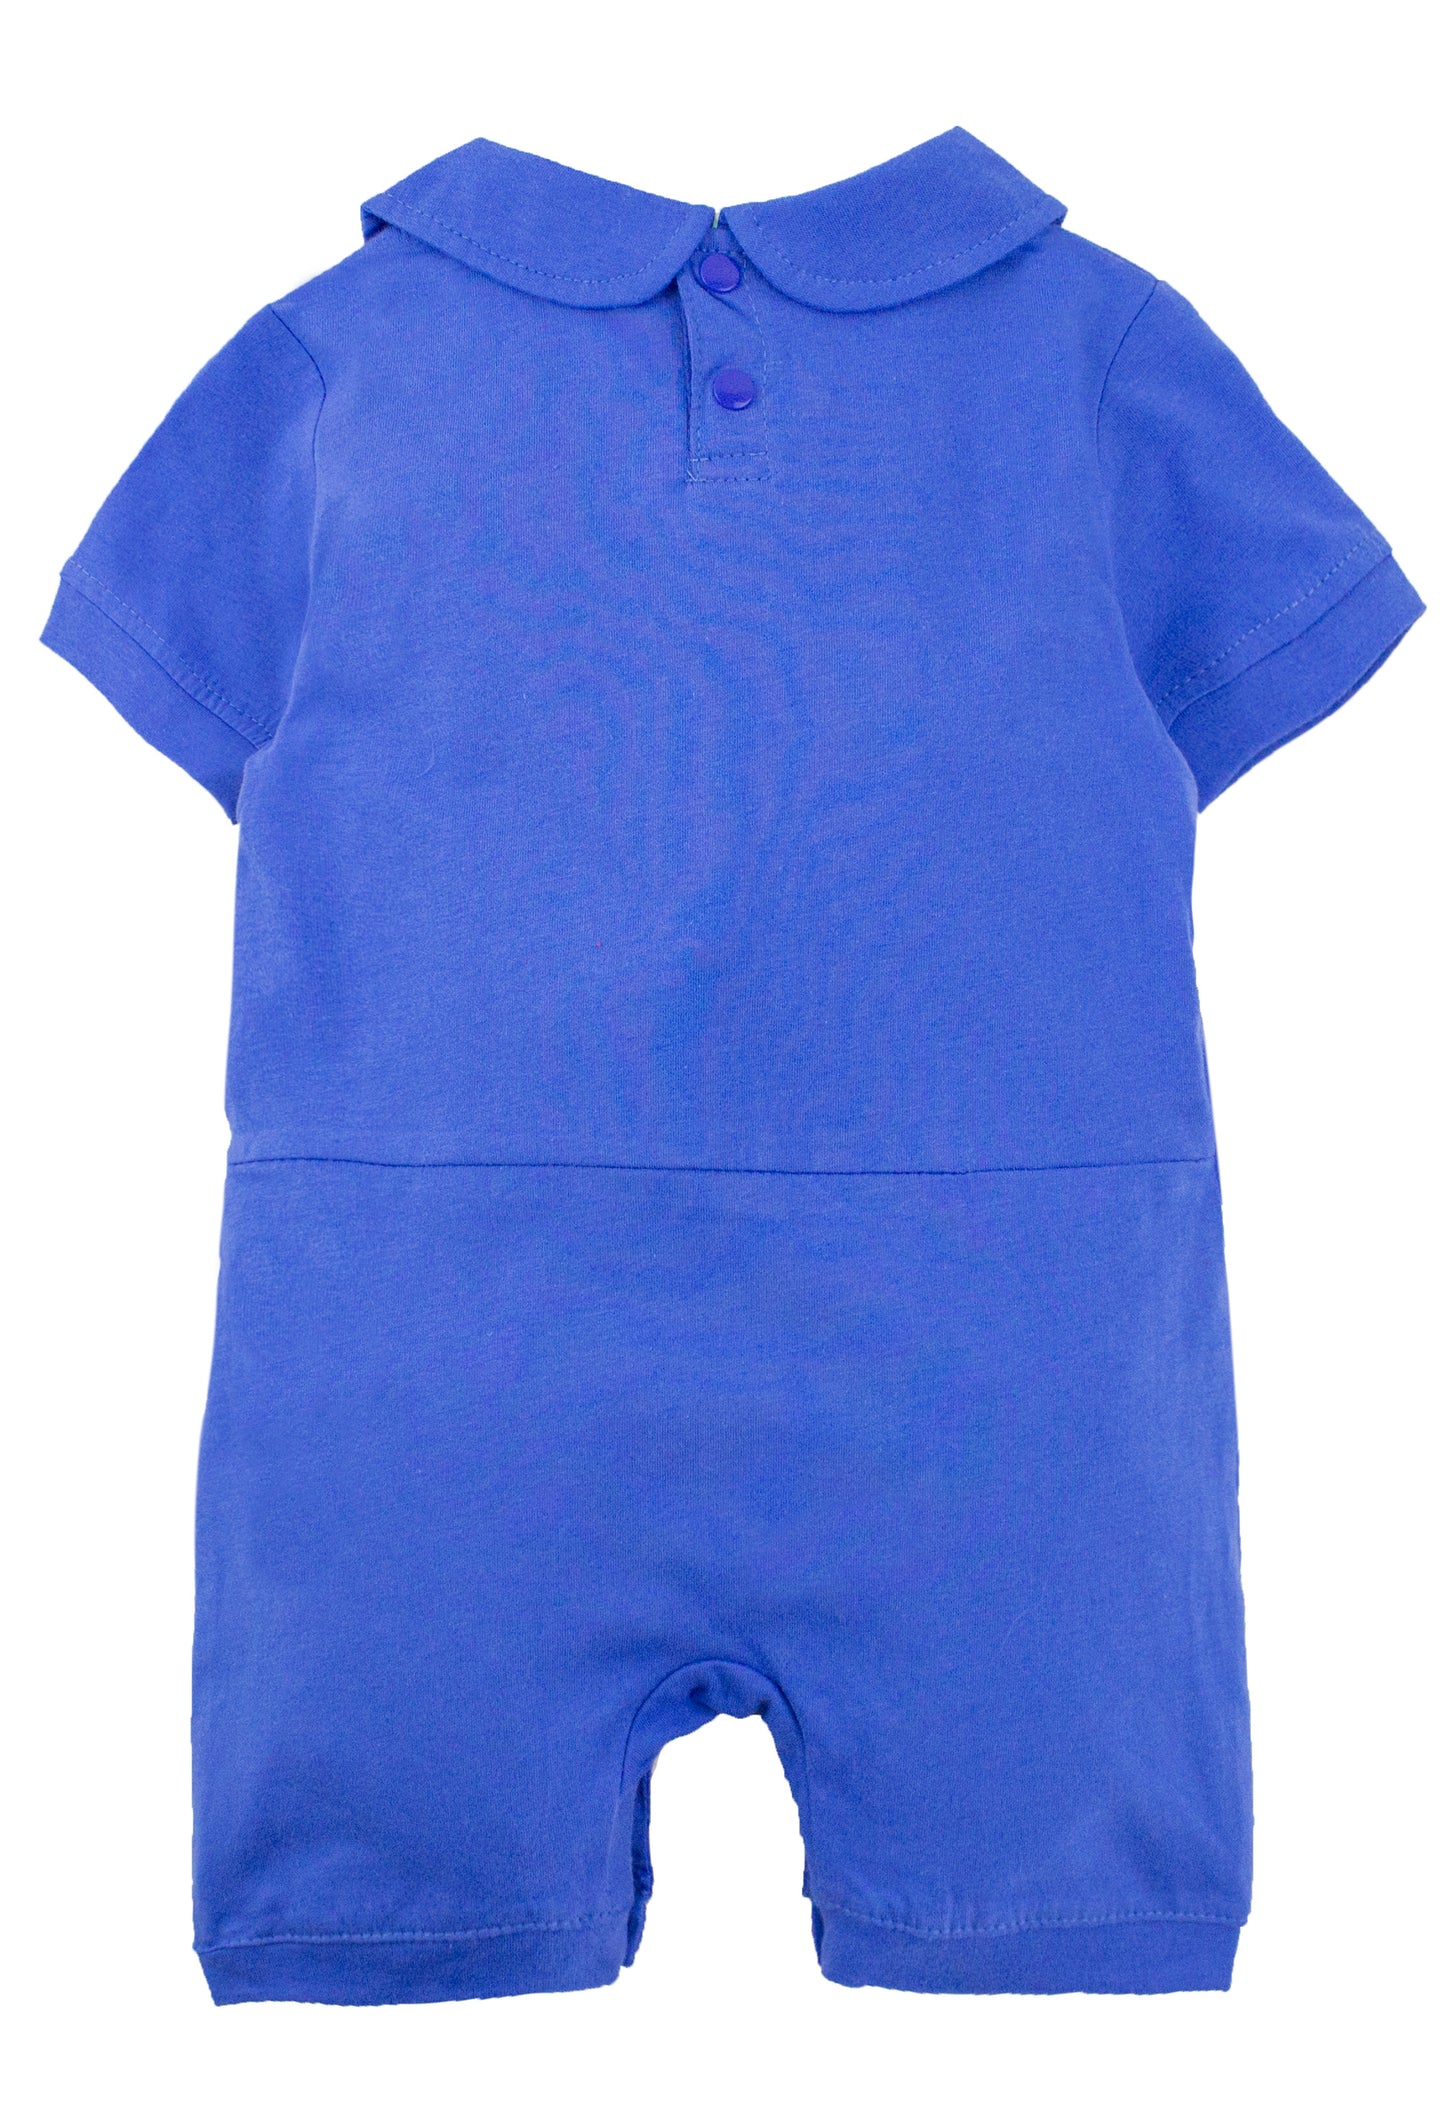 Blue Baby Racer Cotton Costume Romper